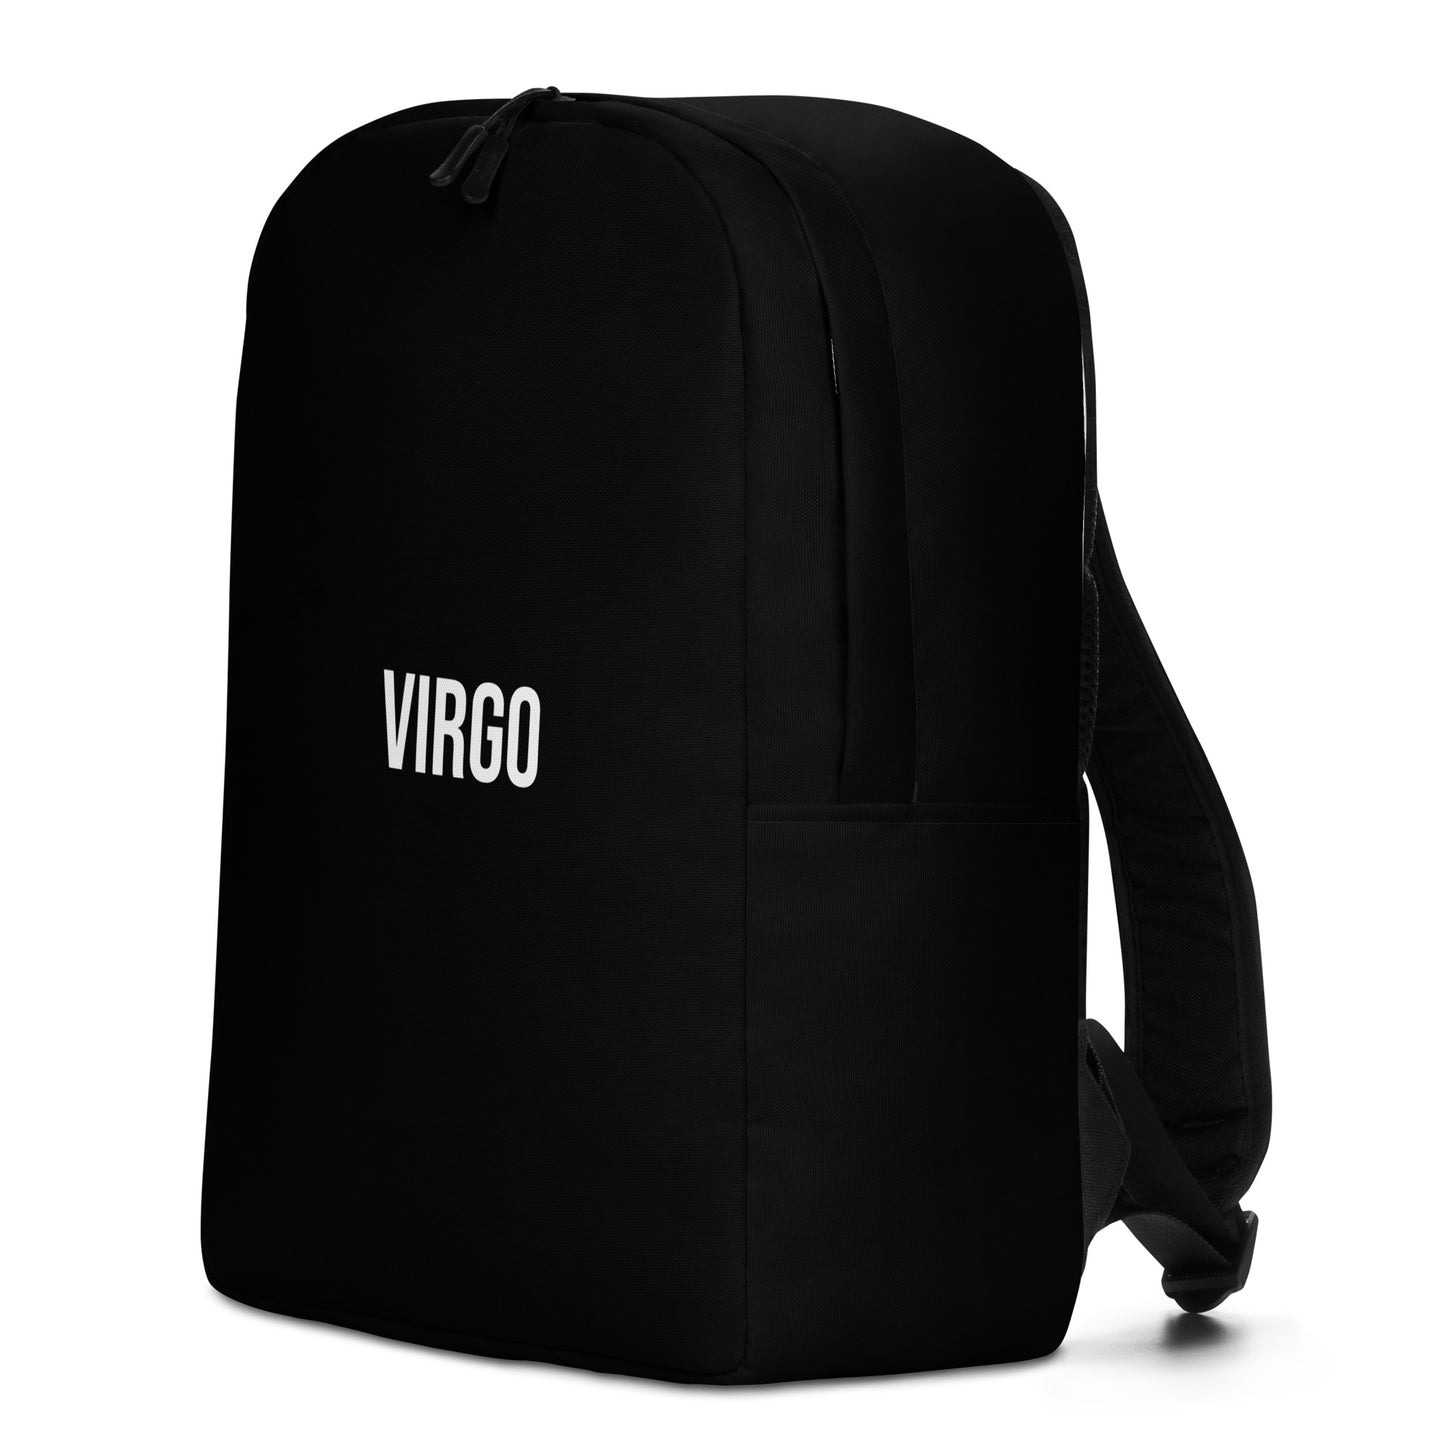 Virgo Backpack Black